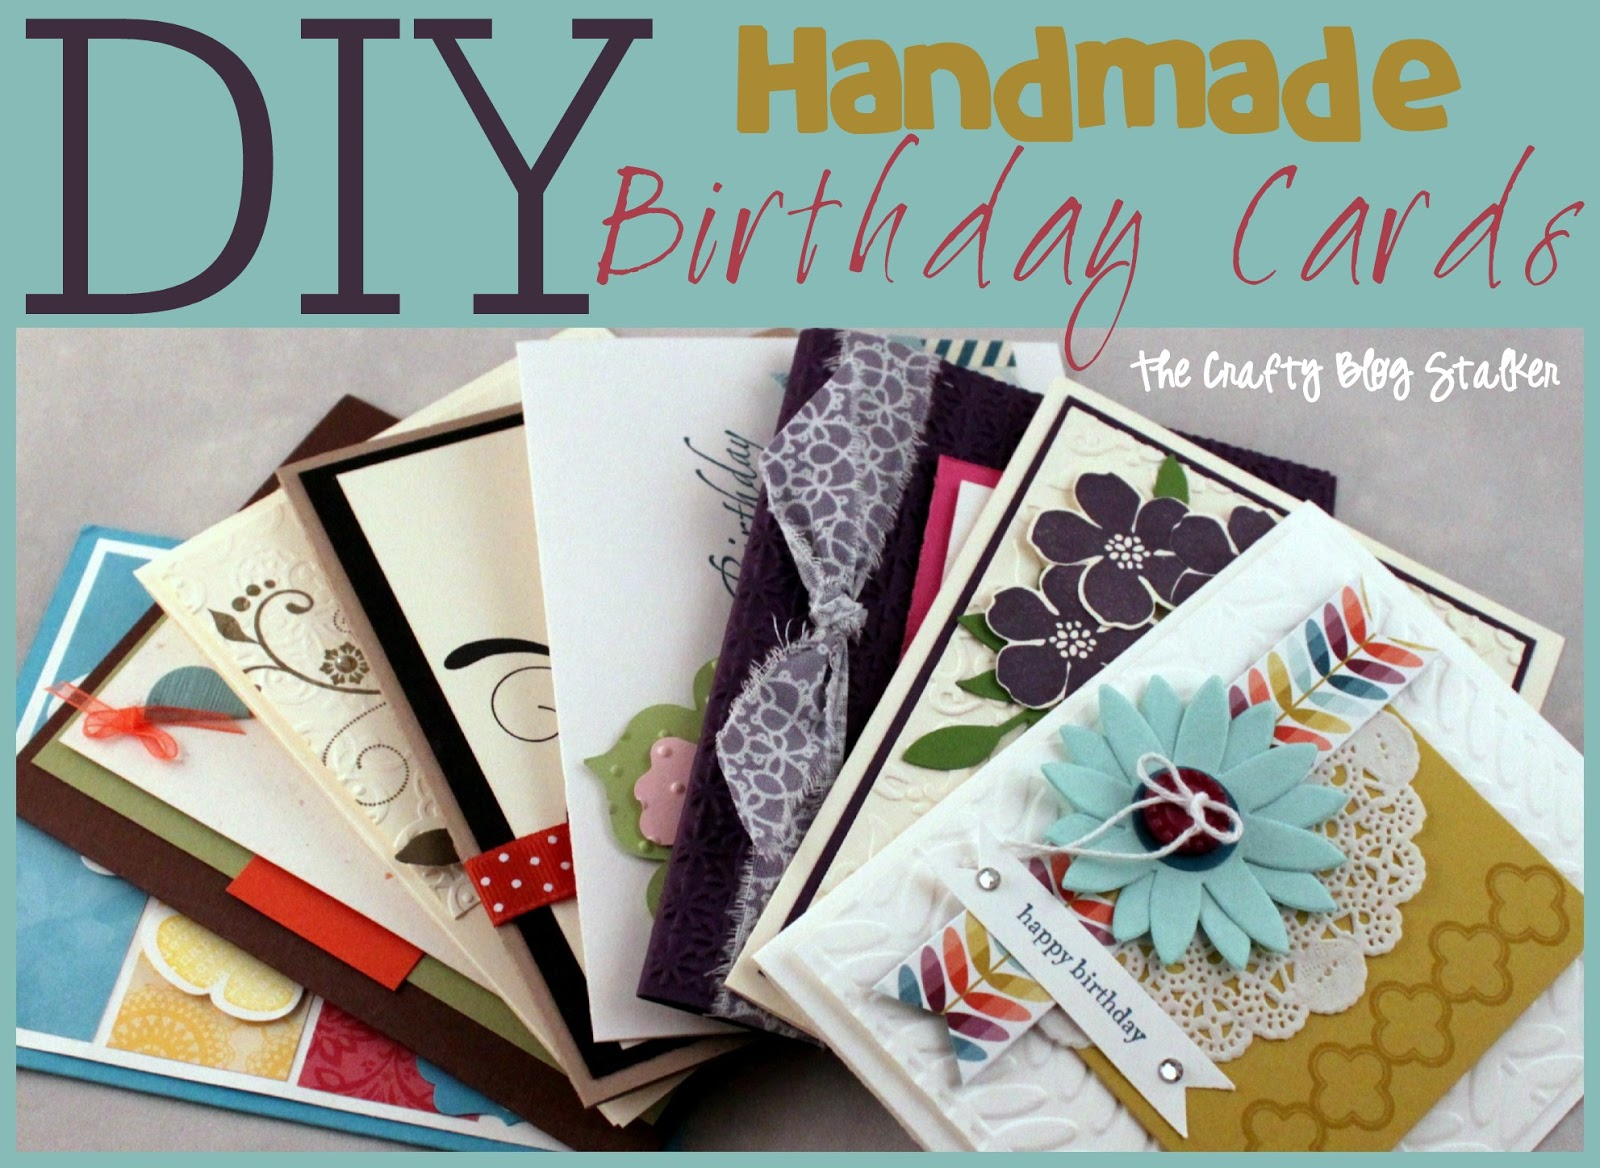 Birthday Card Ideas Handmade Birthday Card Ideas The Crafty Blog Stalker